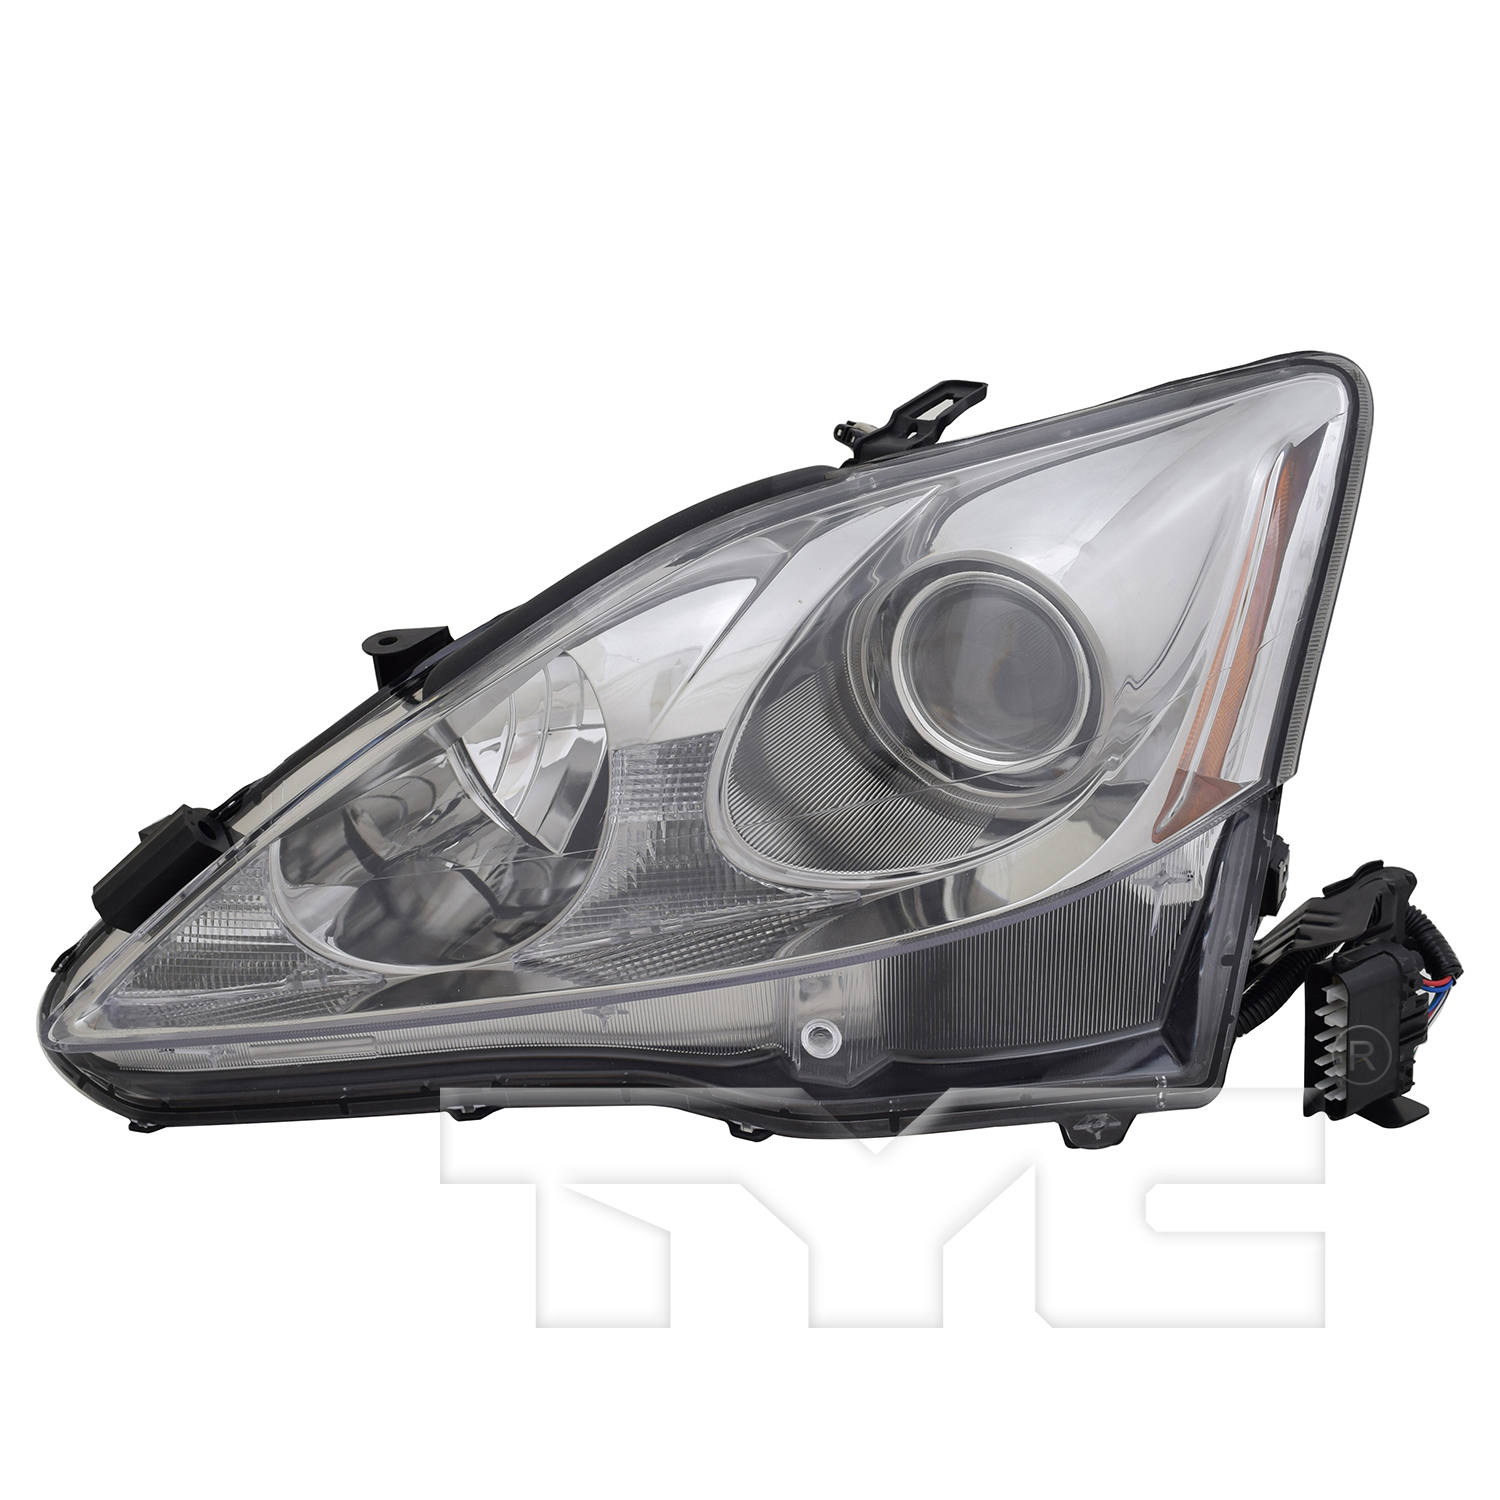 Aftermarket HEADLIGHTS for LEXUS - IS250, IS250,11-13,LT Headlamp lens/housing